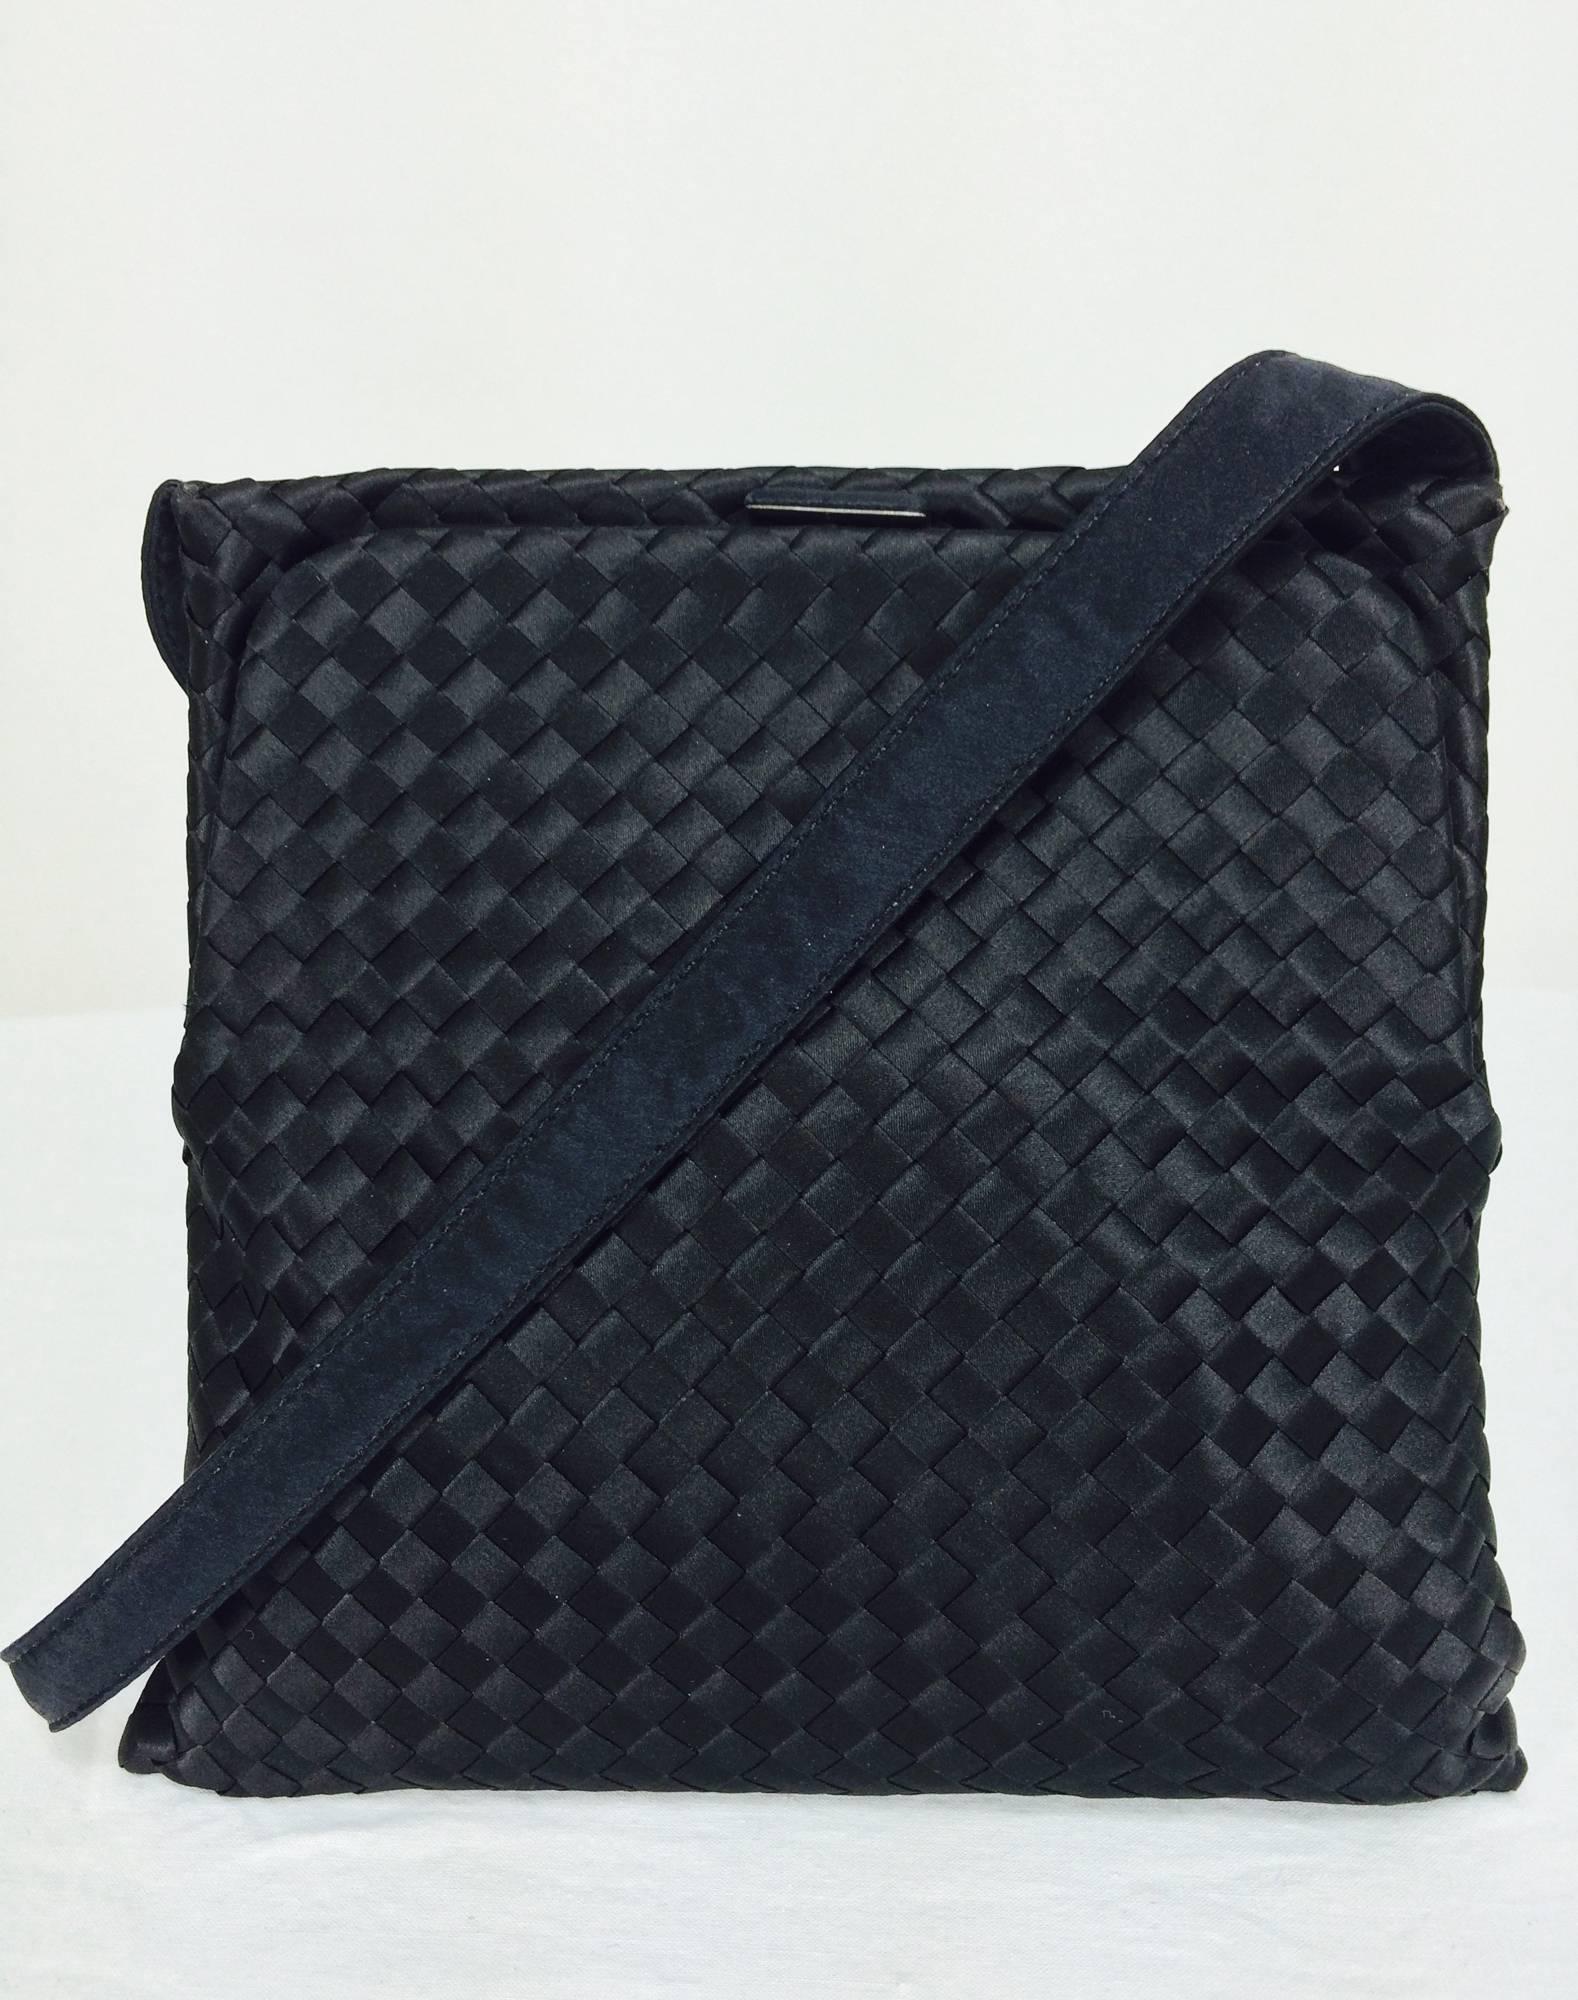 Bottega Veneta black silk satin Intrecciato shoulder bag handbag  1